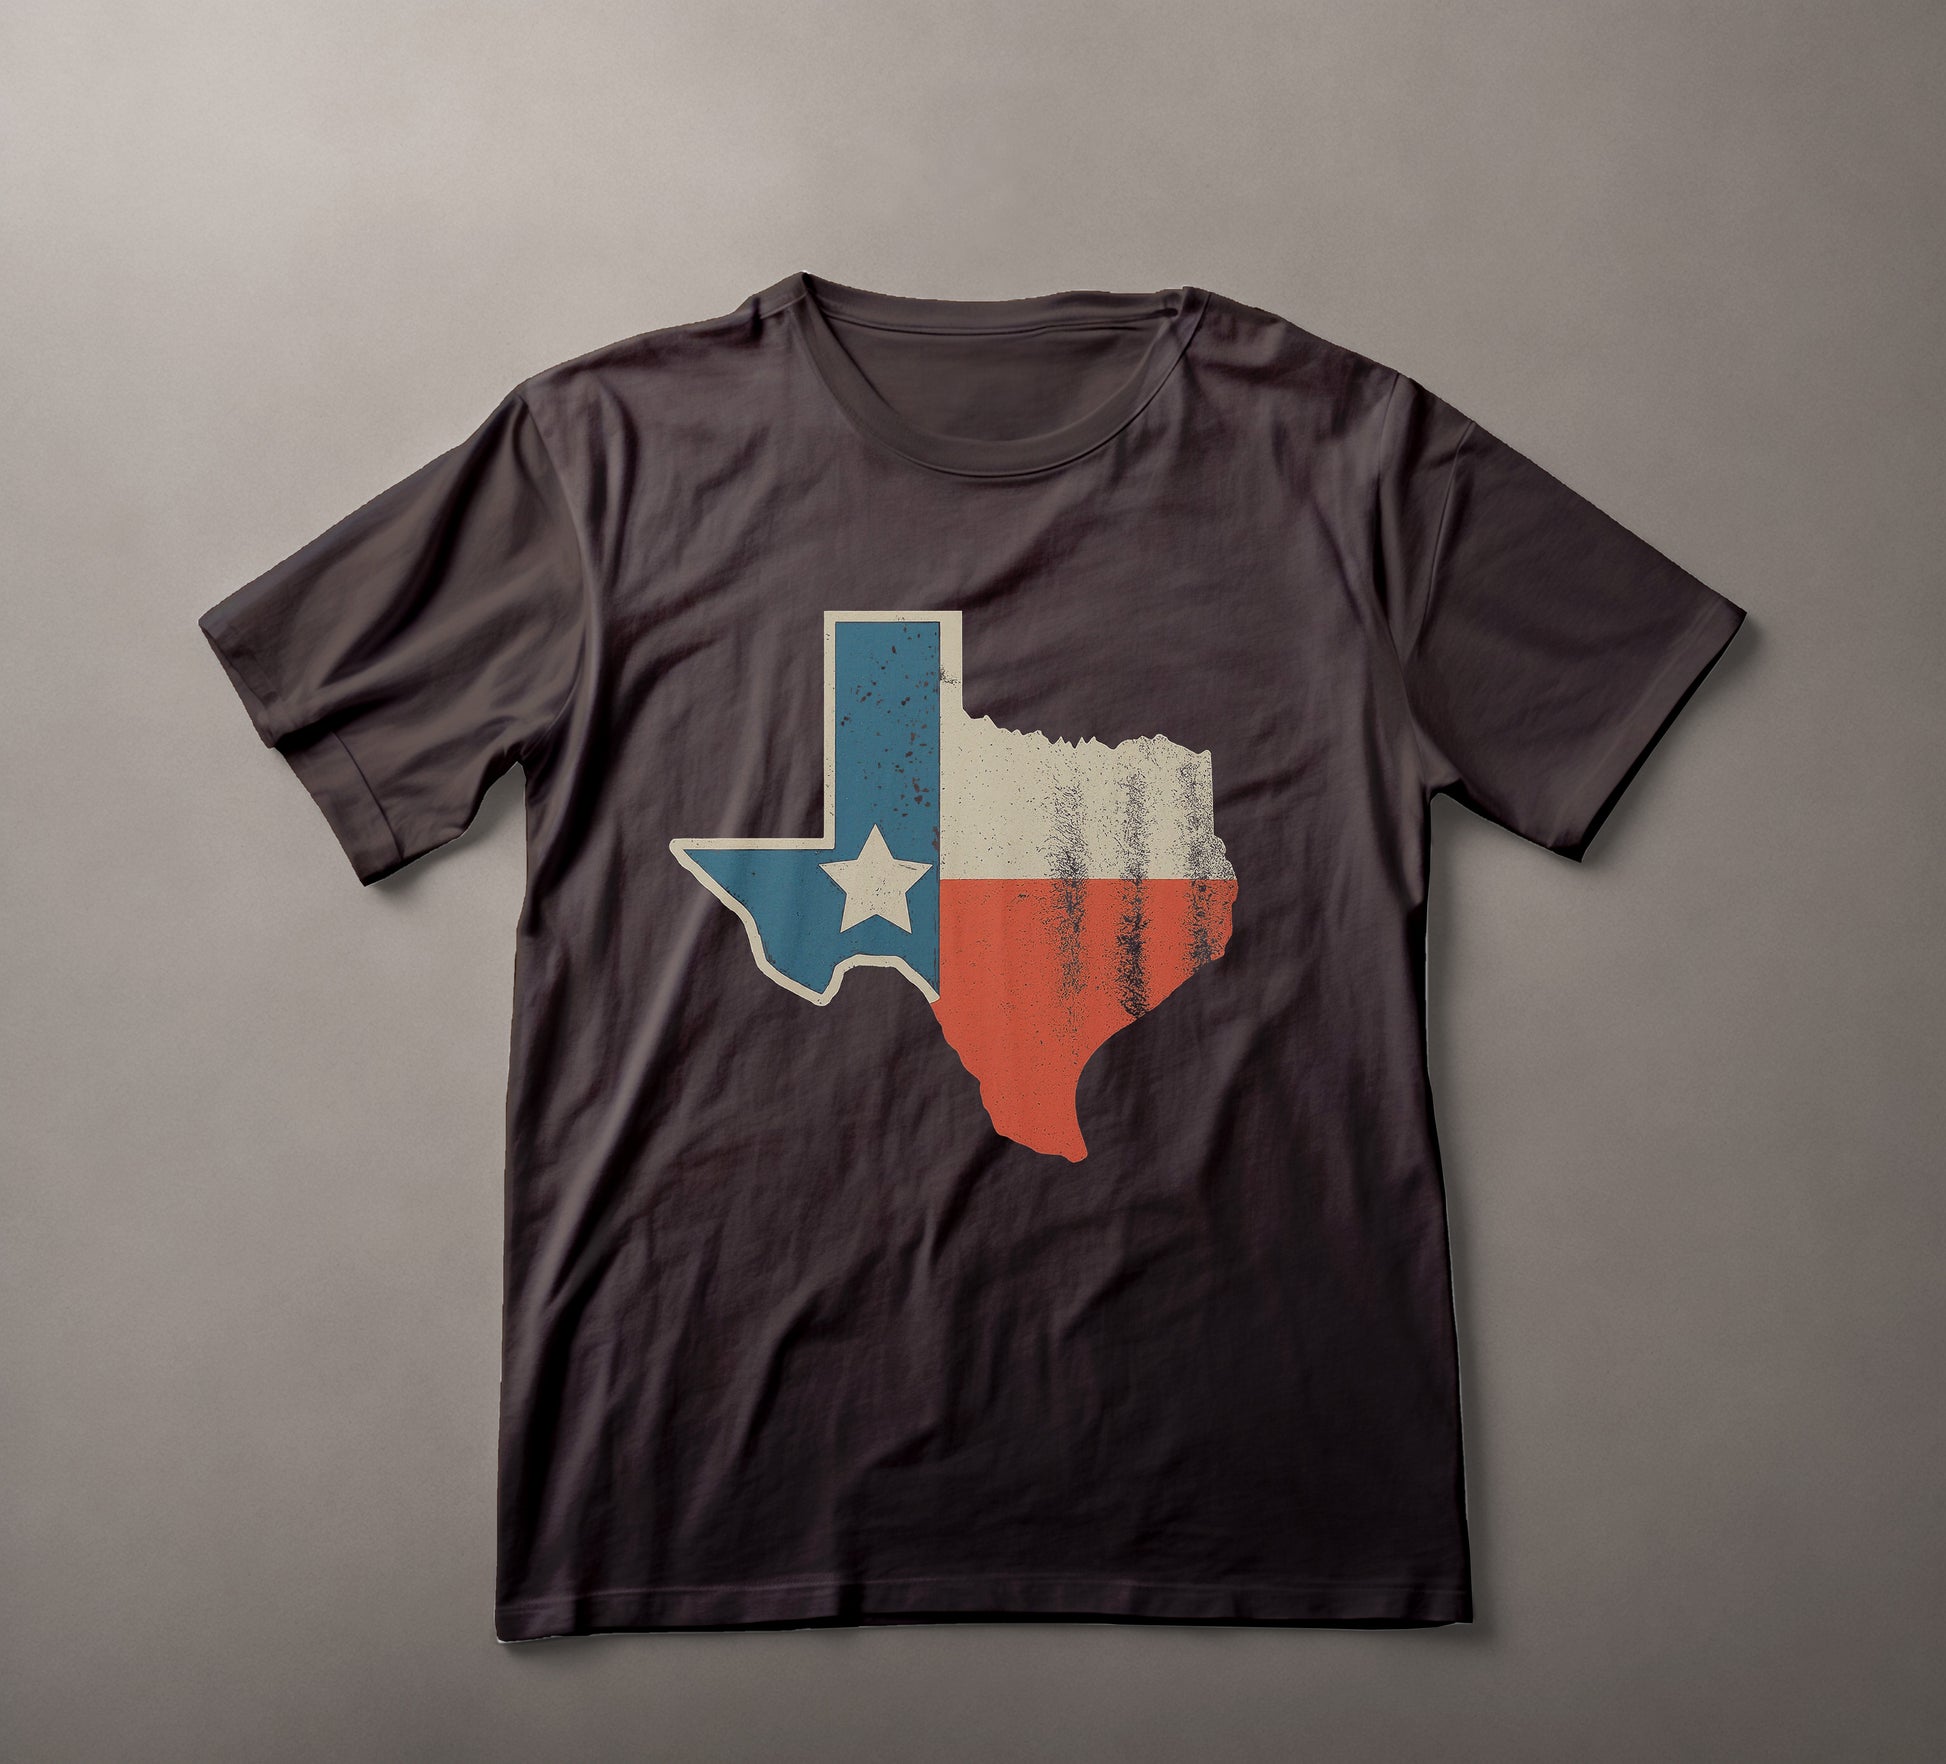 Texas State Flag Shirt, Lone Star Pride T-shirt, Texan Emblem Apparel, Distressed Texas Flag Tee, Rustic State of Texas Clothing, Patriotic Texas Wear, Vintage Texan Flag Fashion, Texas Independence Day Shirt, Souvenir Shirt from Texas, American State Pride Tee